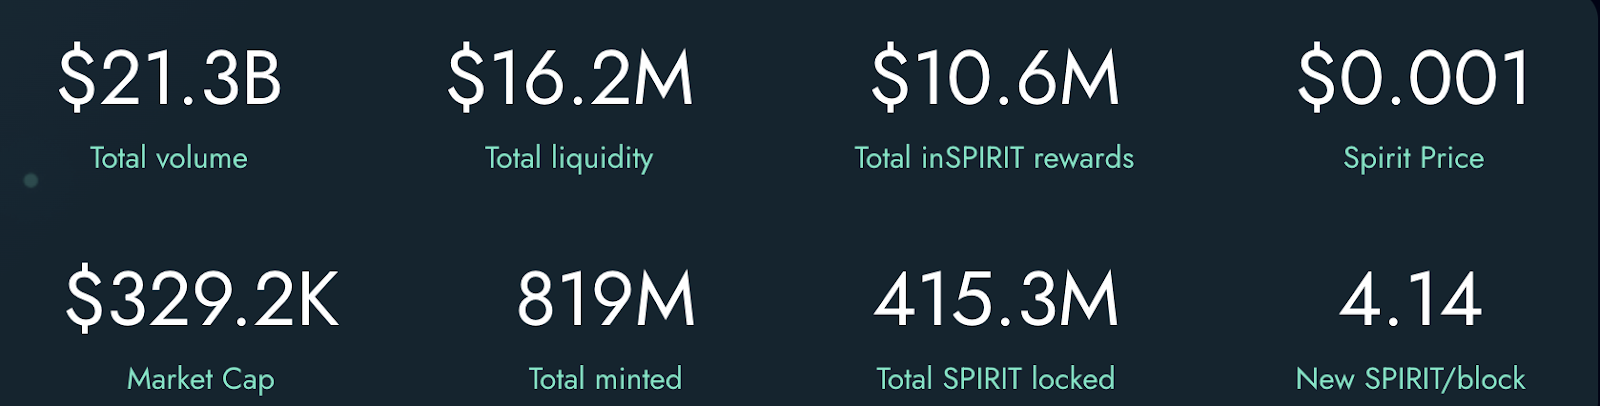 Users have locked over 415 million SPIRIT tokens. Source: SpiritSwap official website.